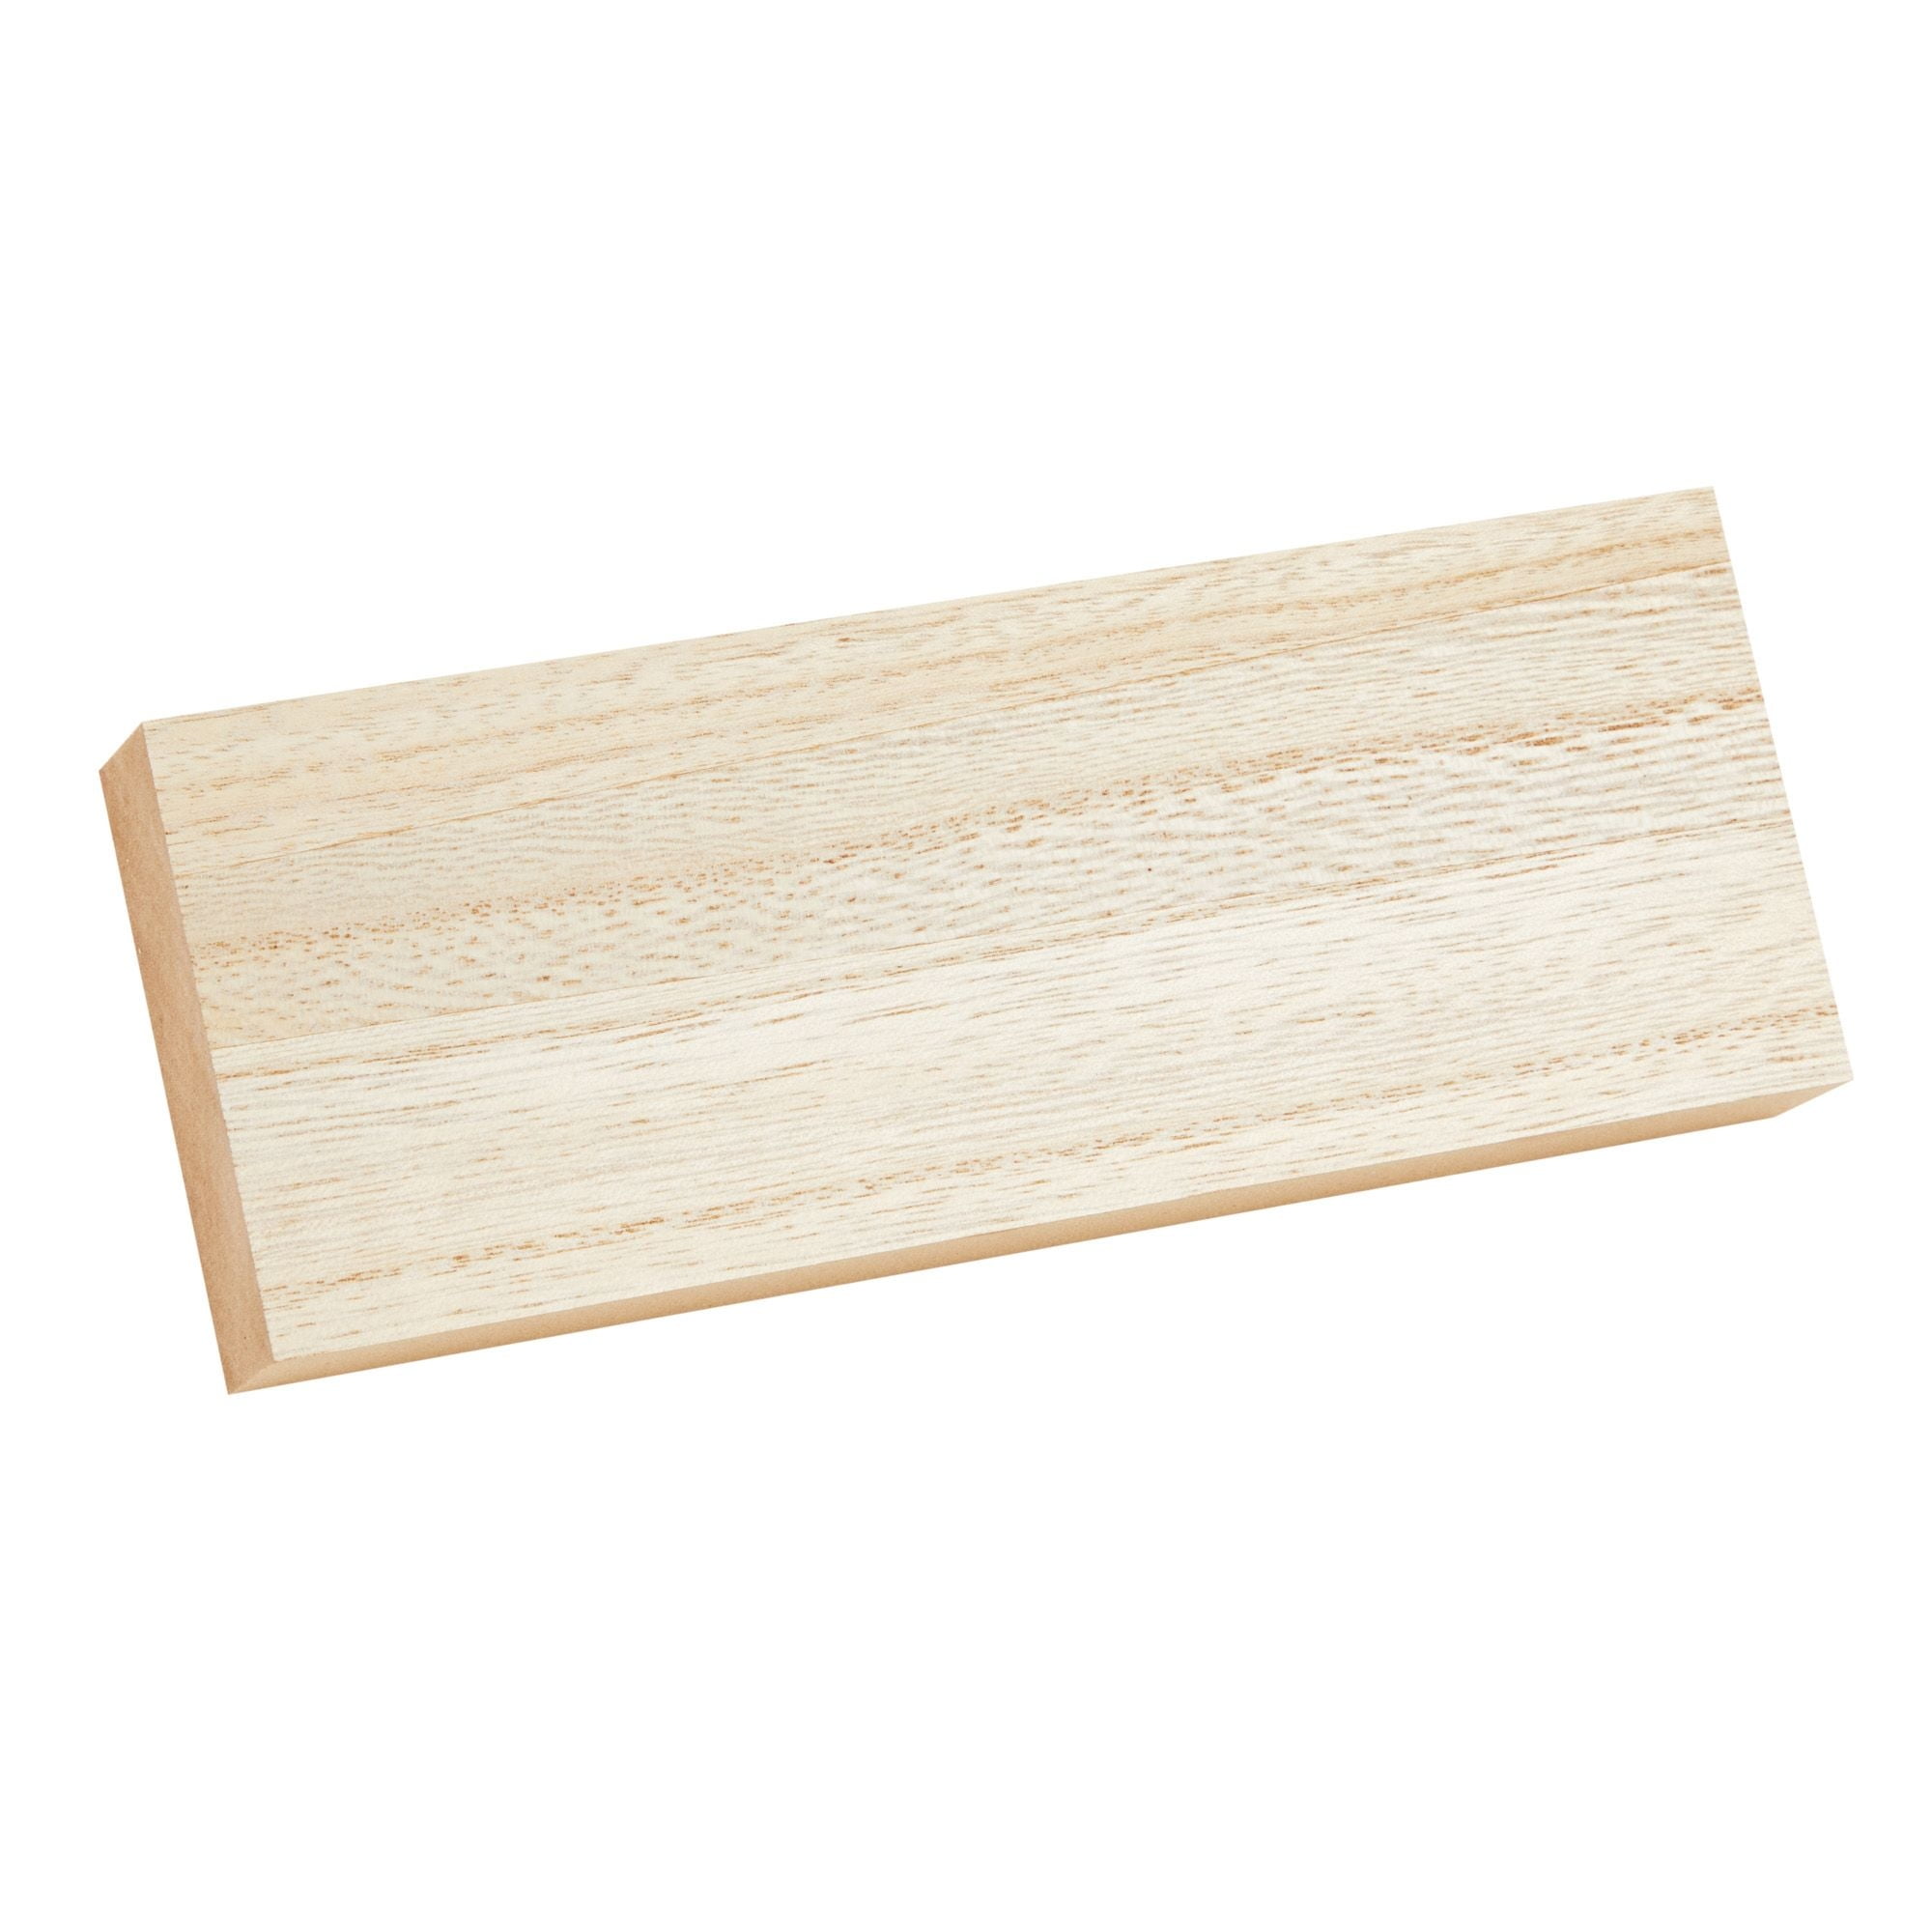 4 Feet Rectangular Rectangle Wooden Block, Thickness: 2 Inch